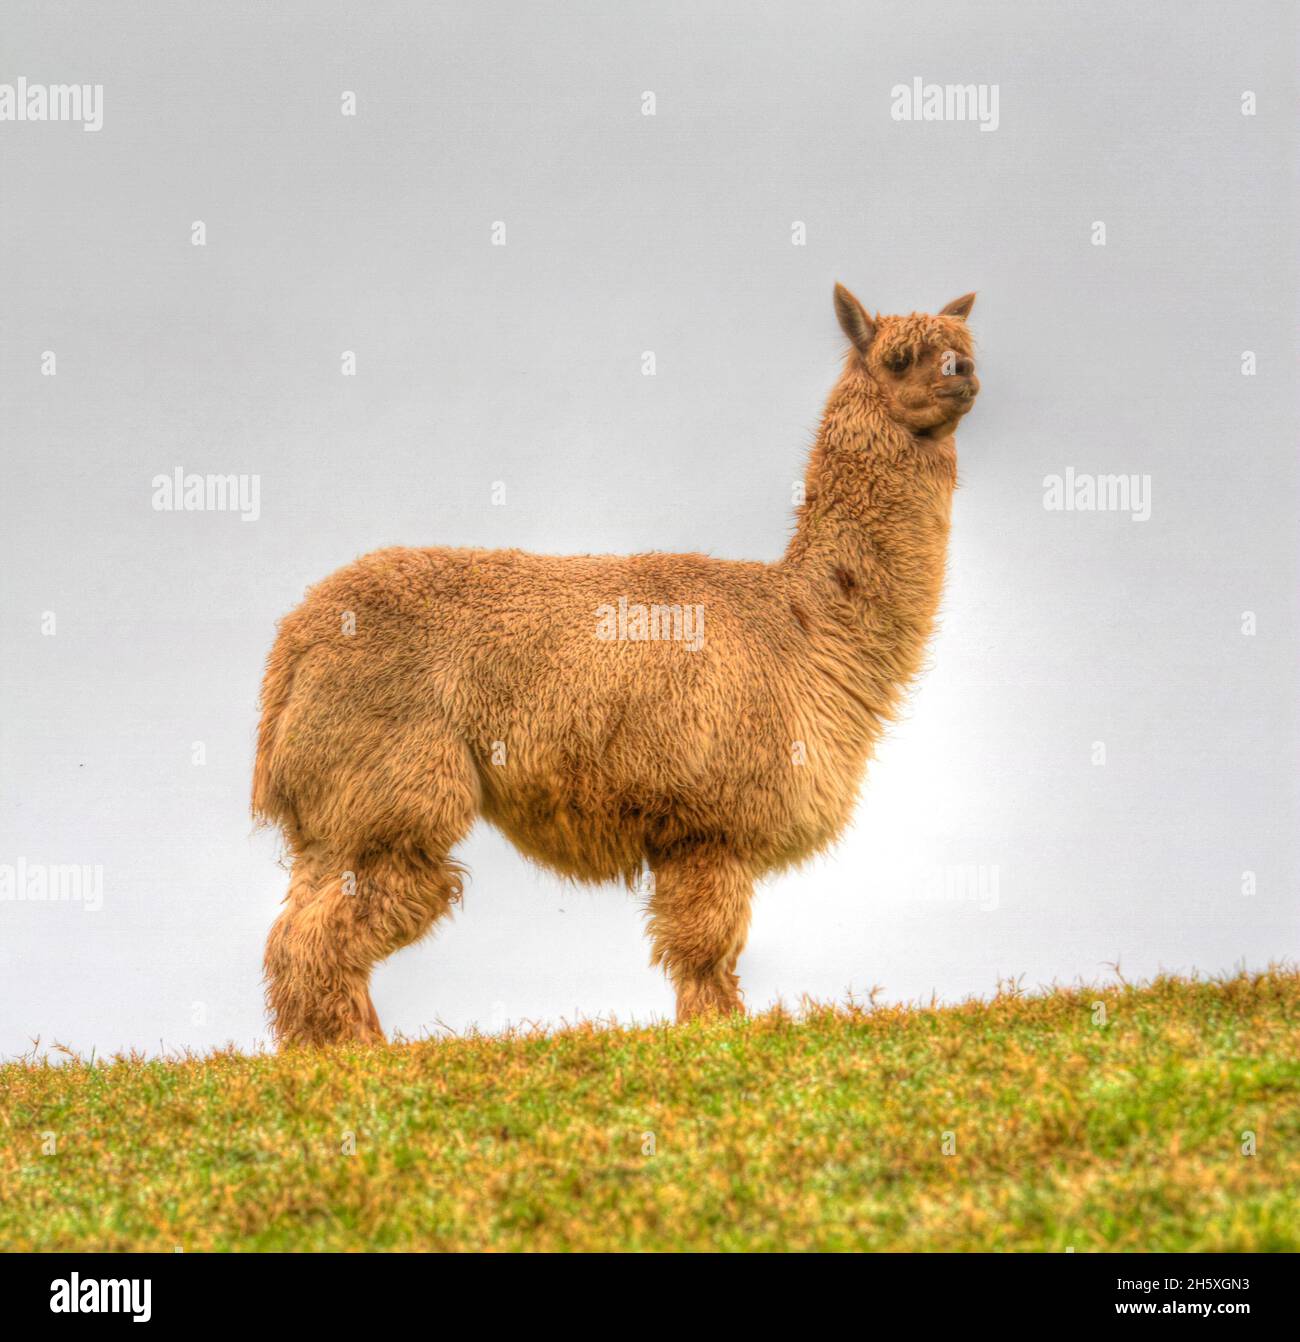 Alpaca animal brown and hairy fleece magnificent popular specimen Stock Photo